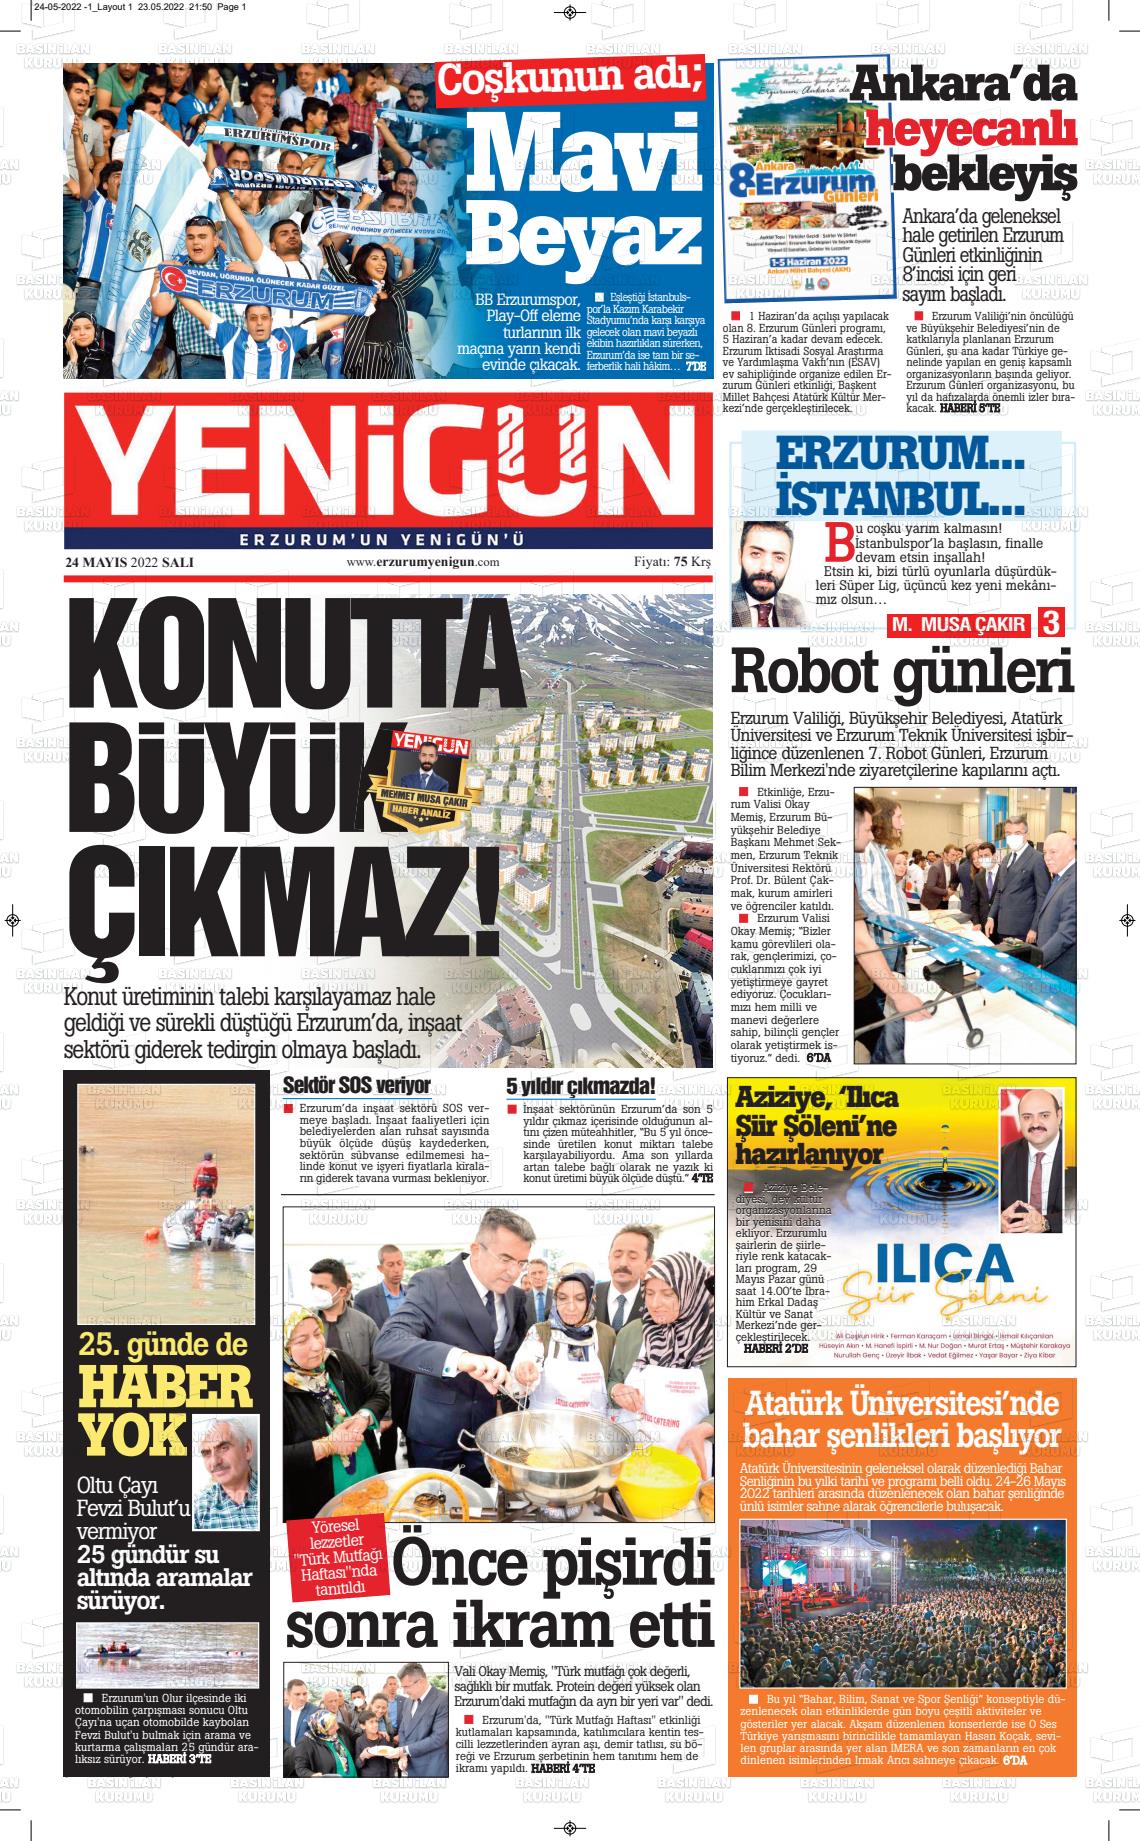 24 Mayıs 2022 Erzurum Yenigün Gazete Manşeti